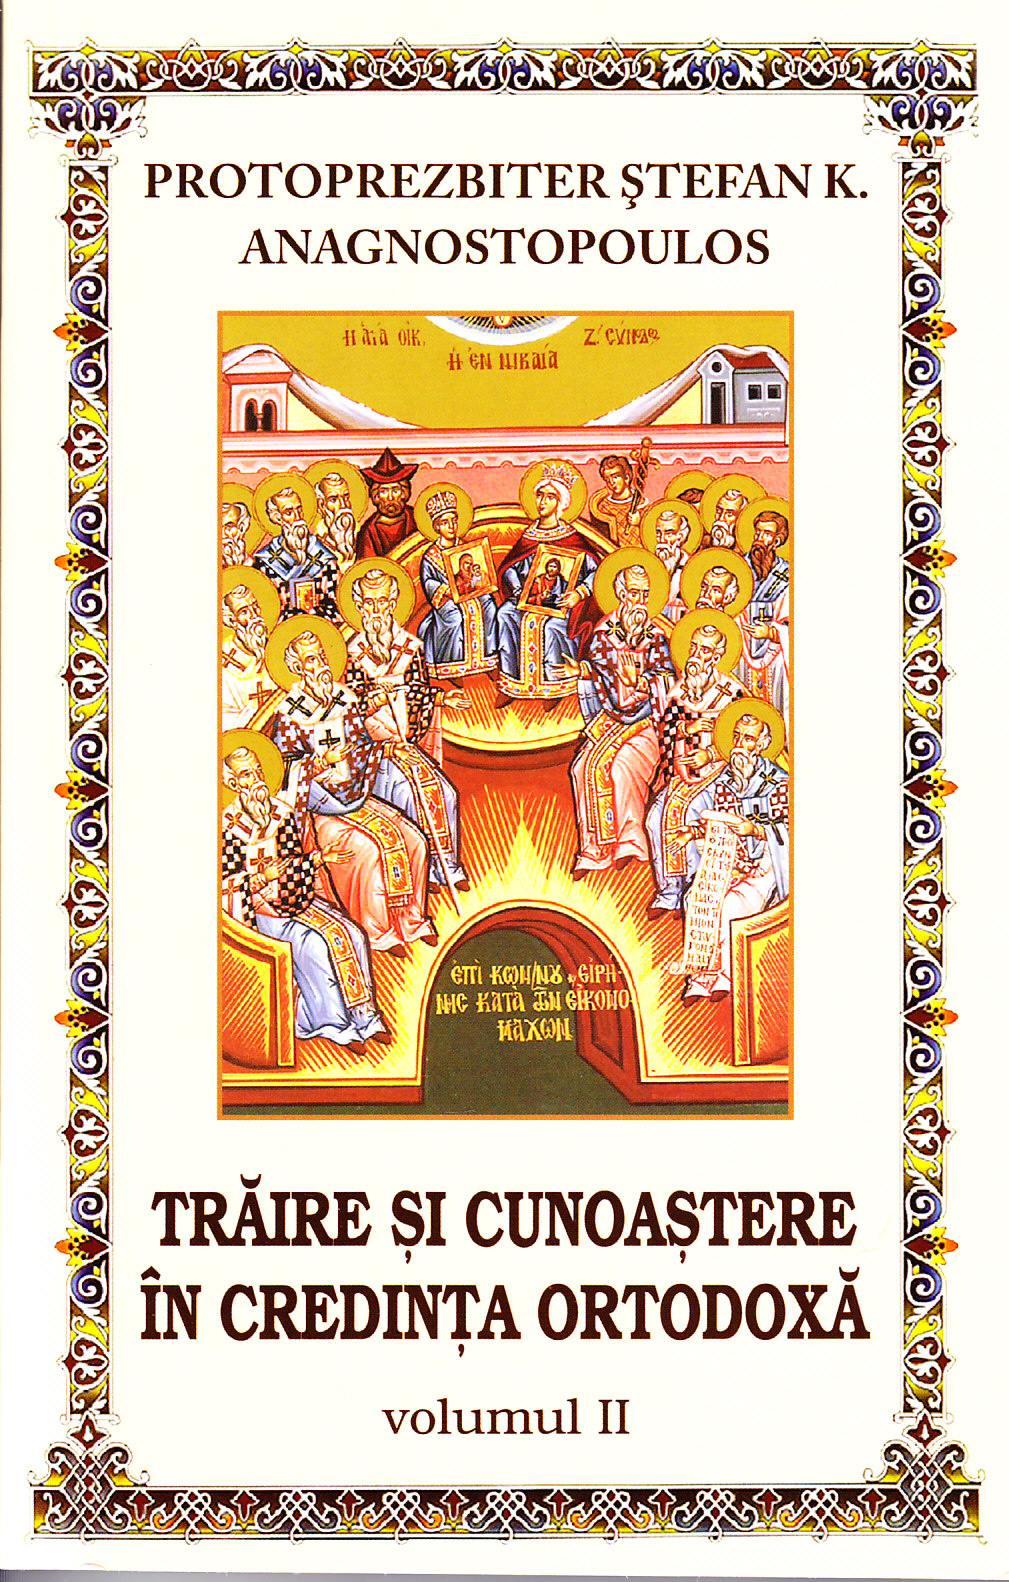 Traire si cunoastere in credinta ortodoxa vol.2 - Protoprezbiter Stefan K. Anagnostopoulos